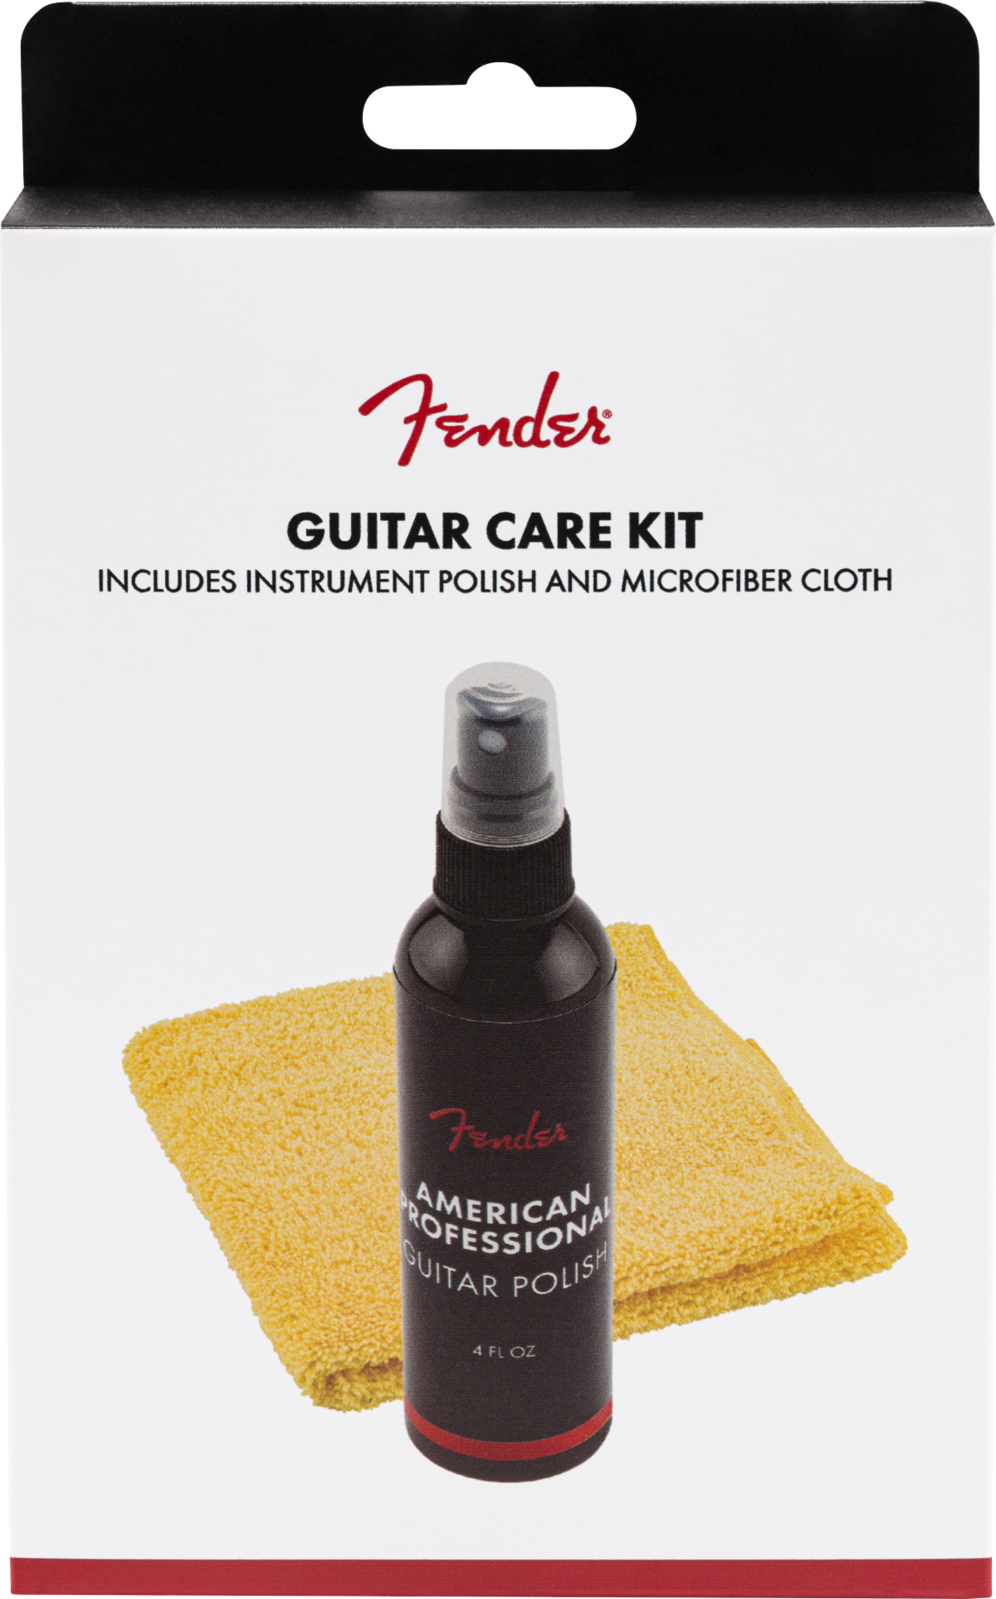 Fender Polish And Cloth Care Kit